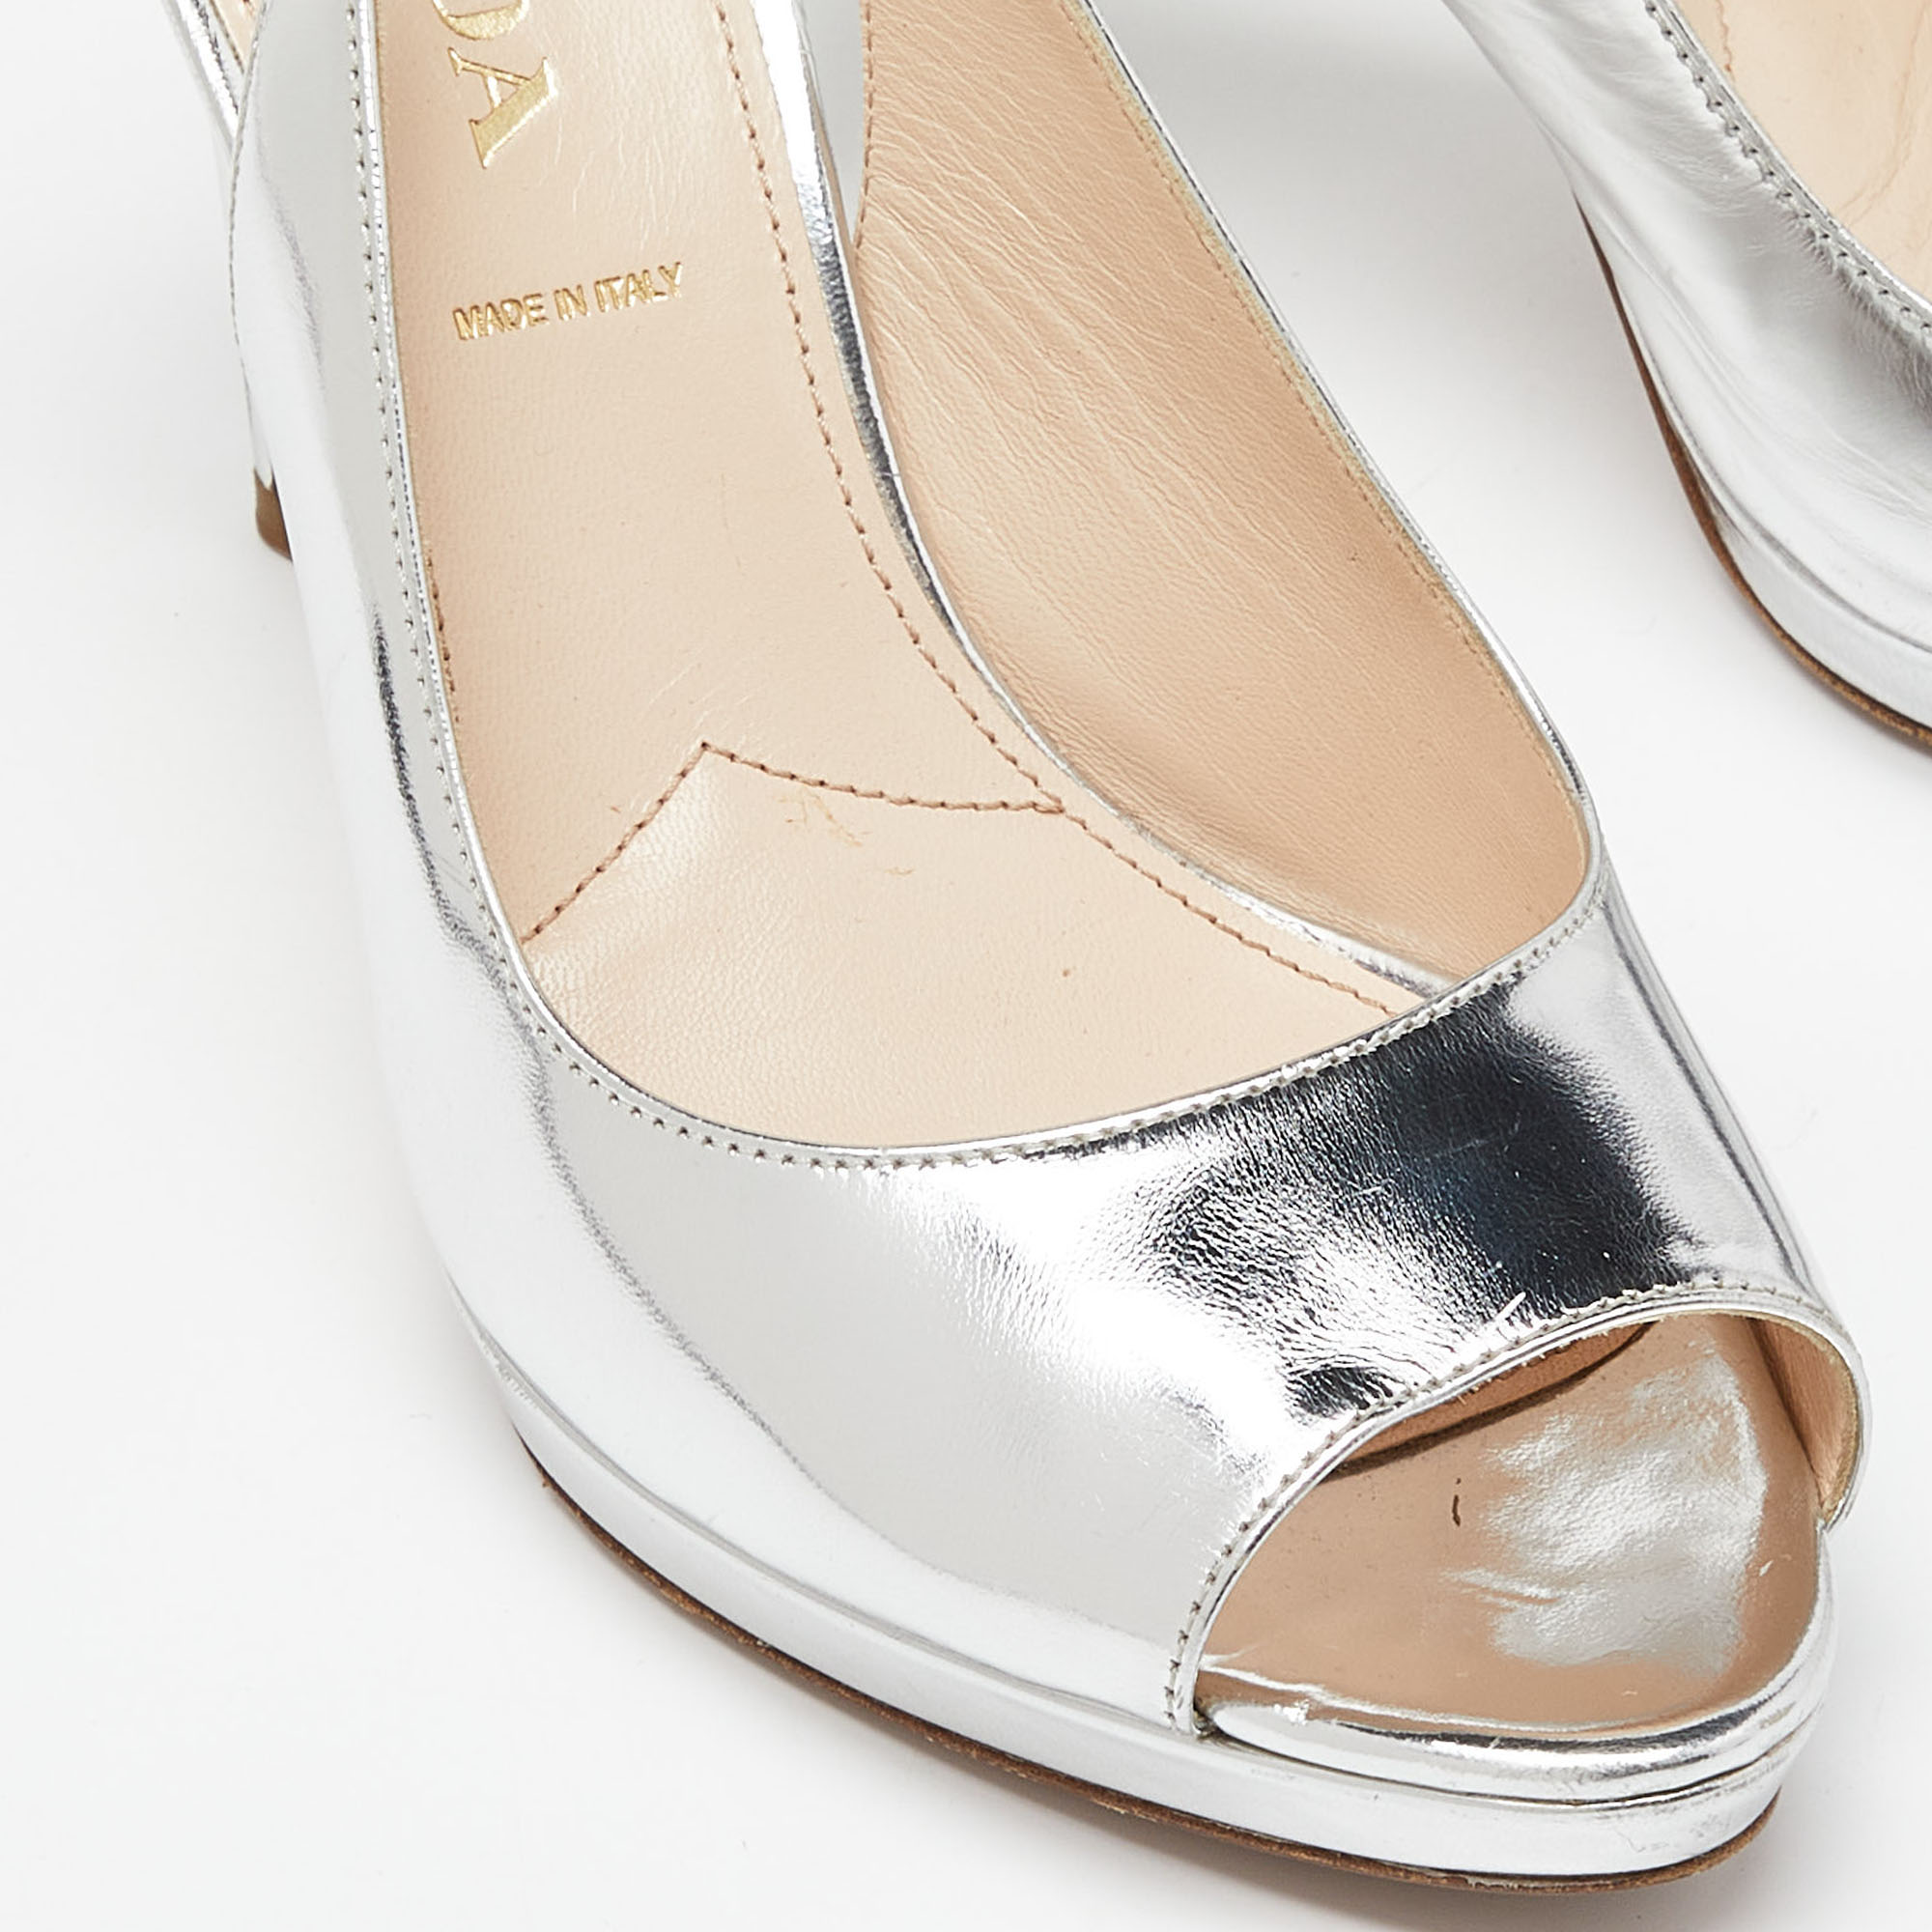 Prada Silver Laminated Leather Peep Toe Slingback Sandals Size 39